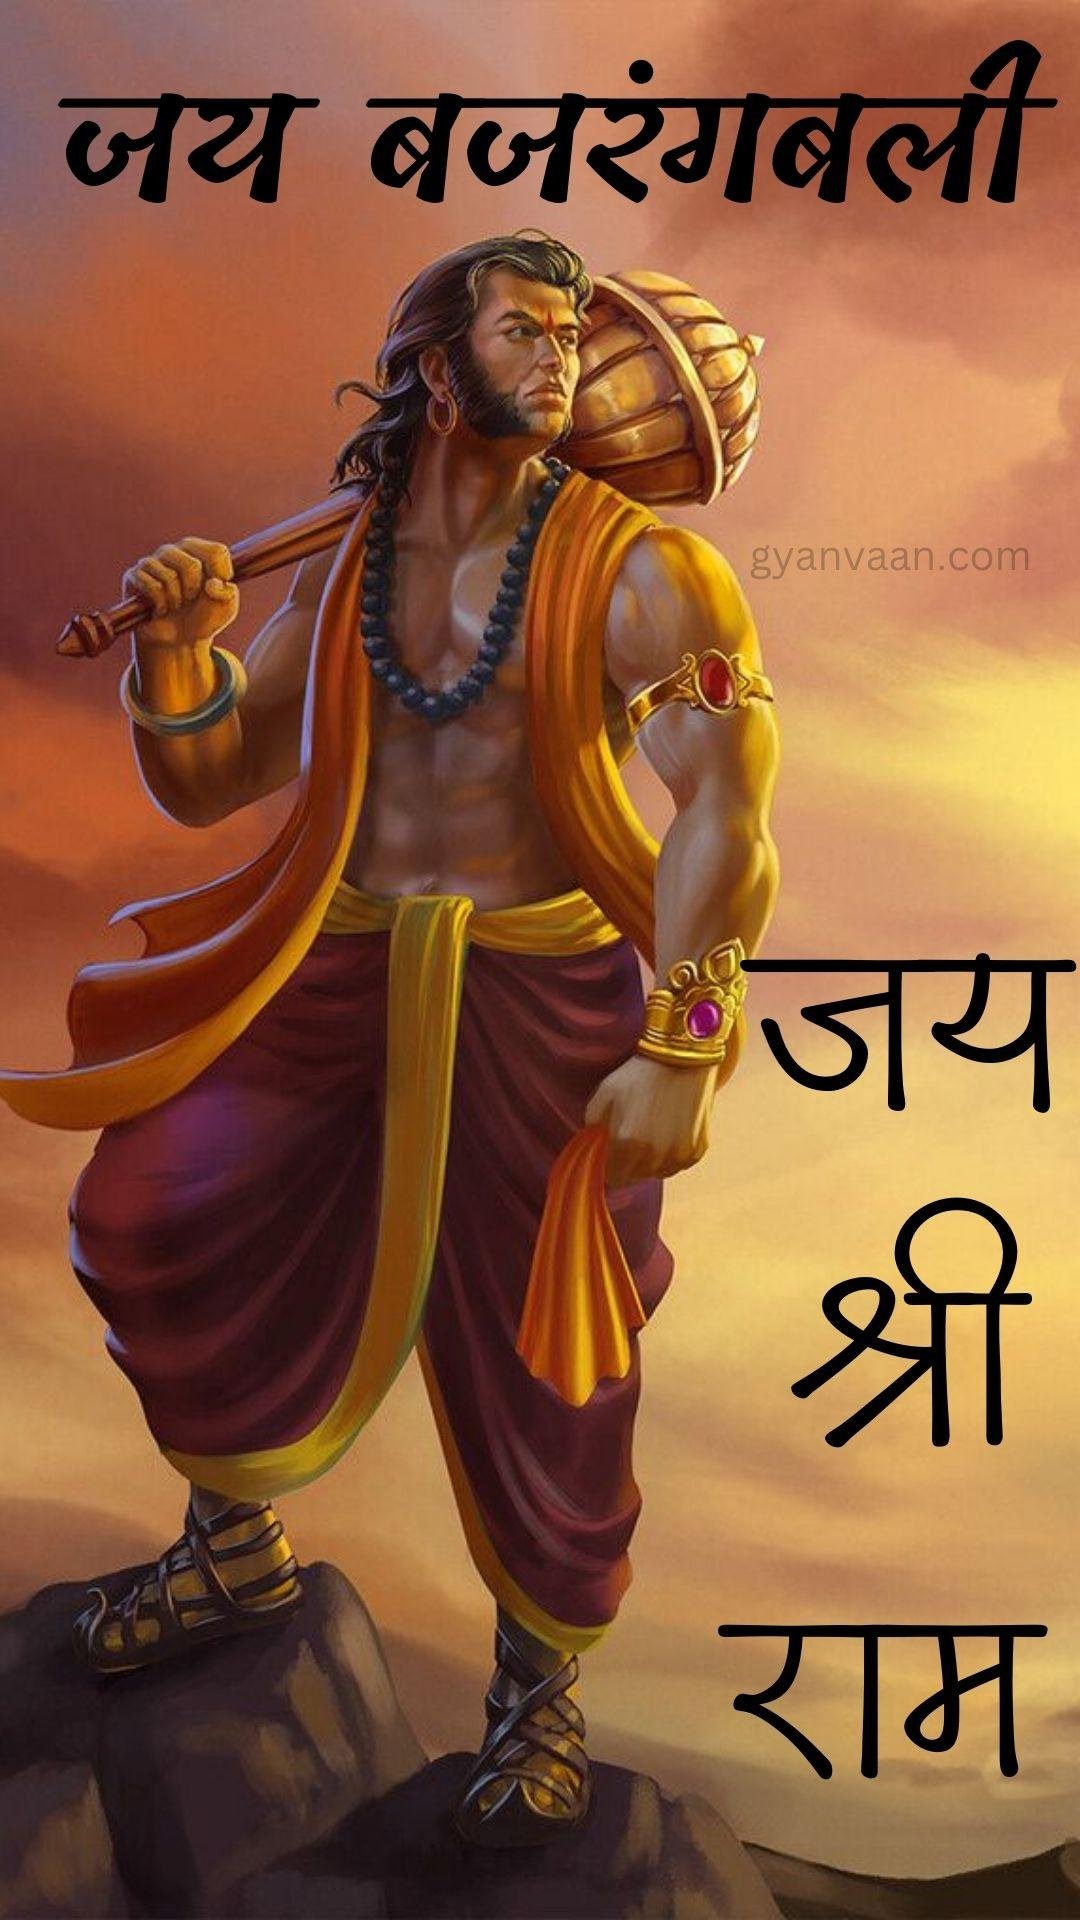 Hanuman Quotes Shayari And Whatsapp Status For Mobile With Hanuman Images And Photos 67 - Hanuman Images